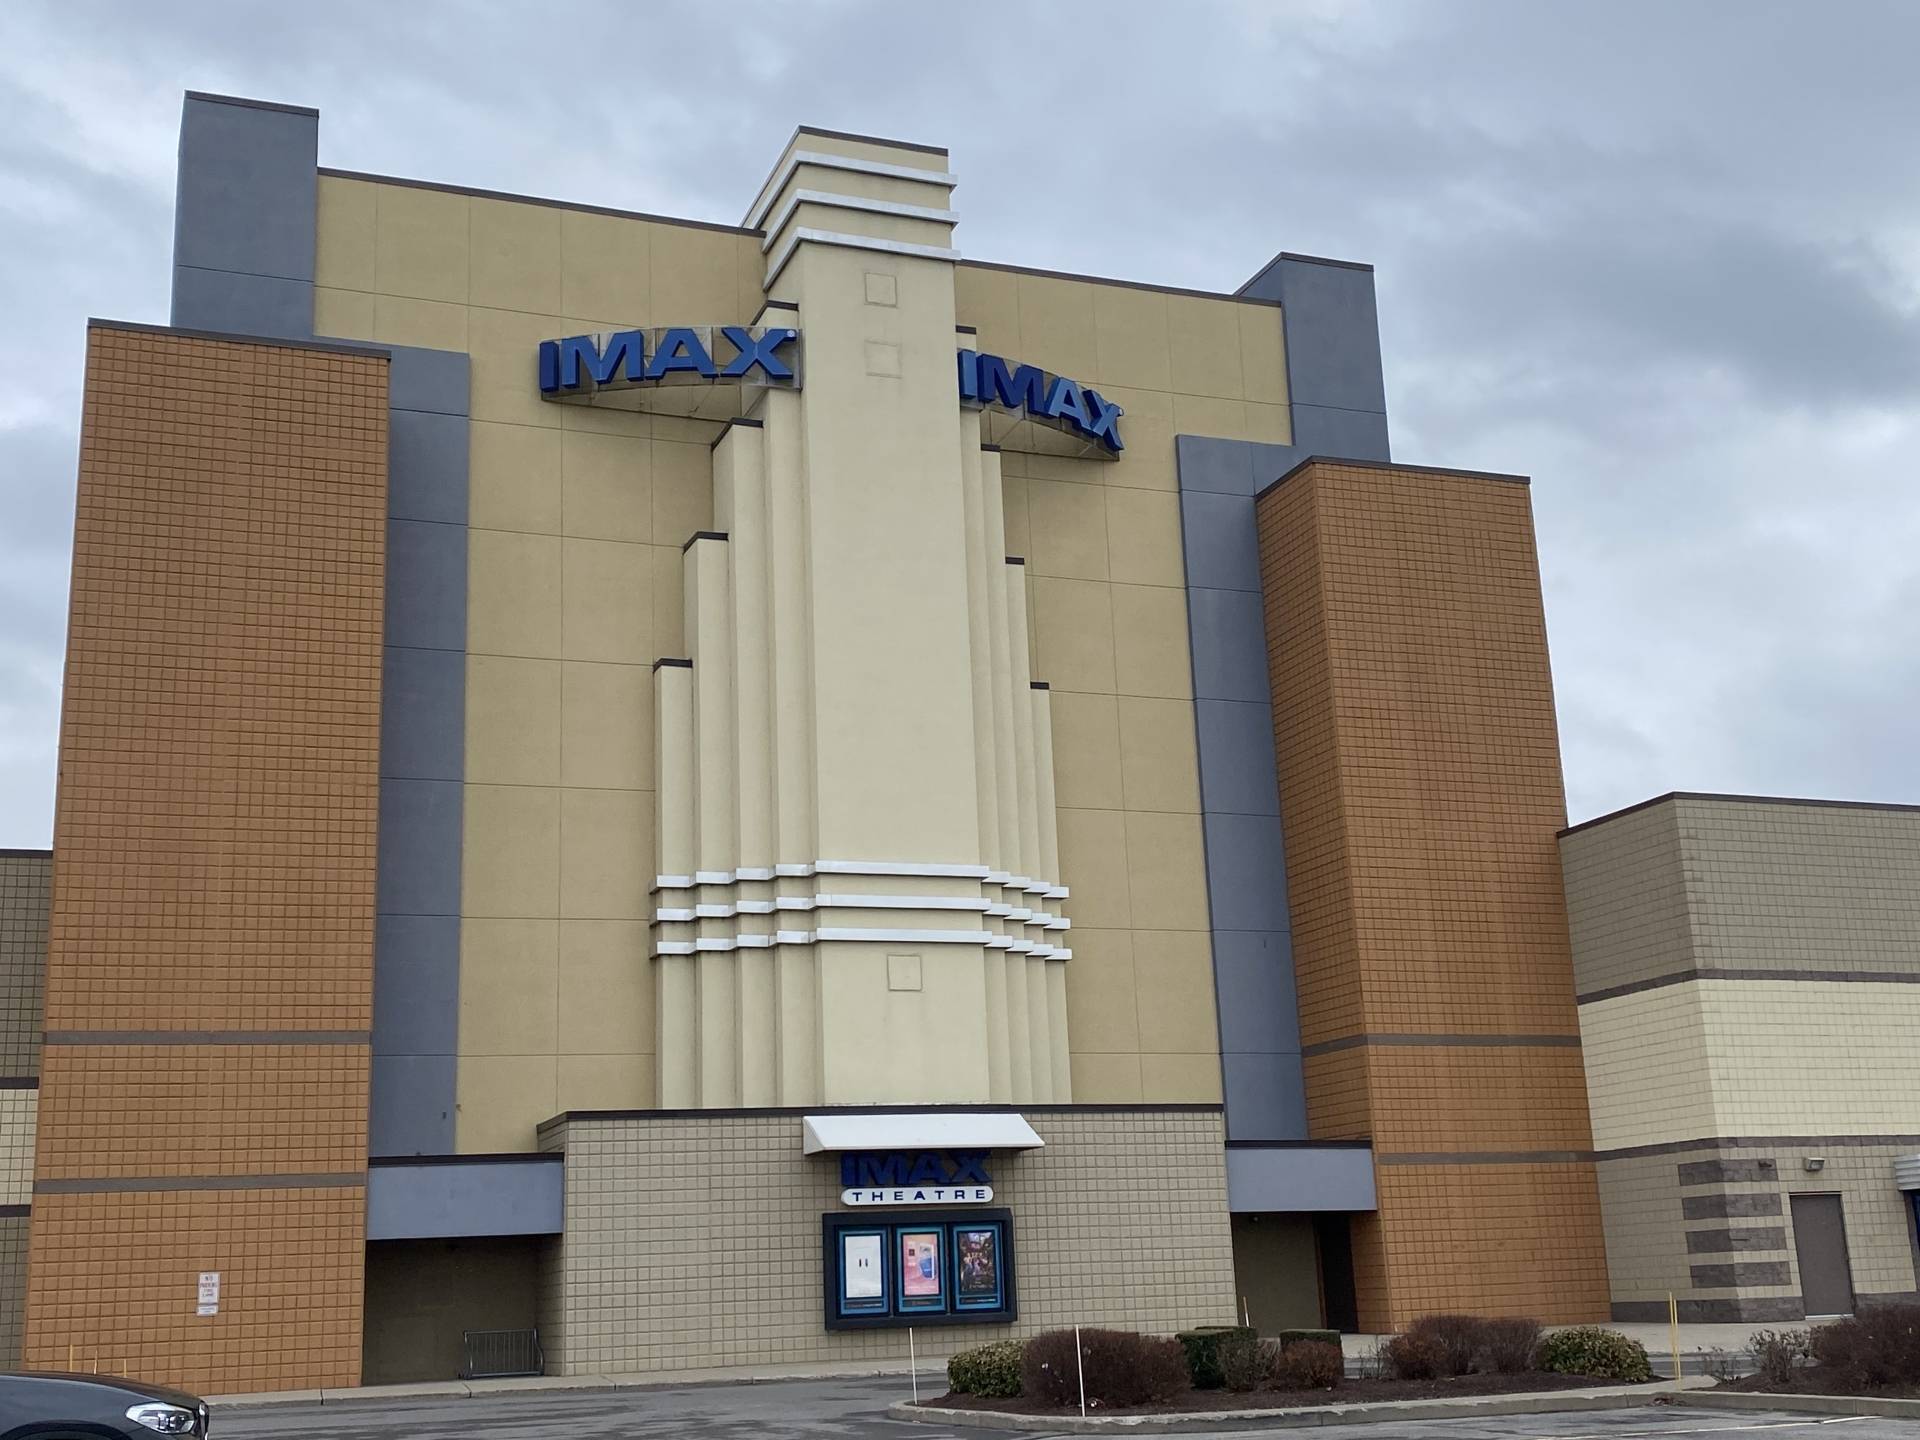 Regal Transit Center & IMAX